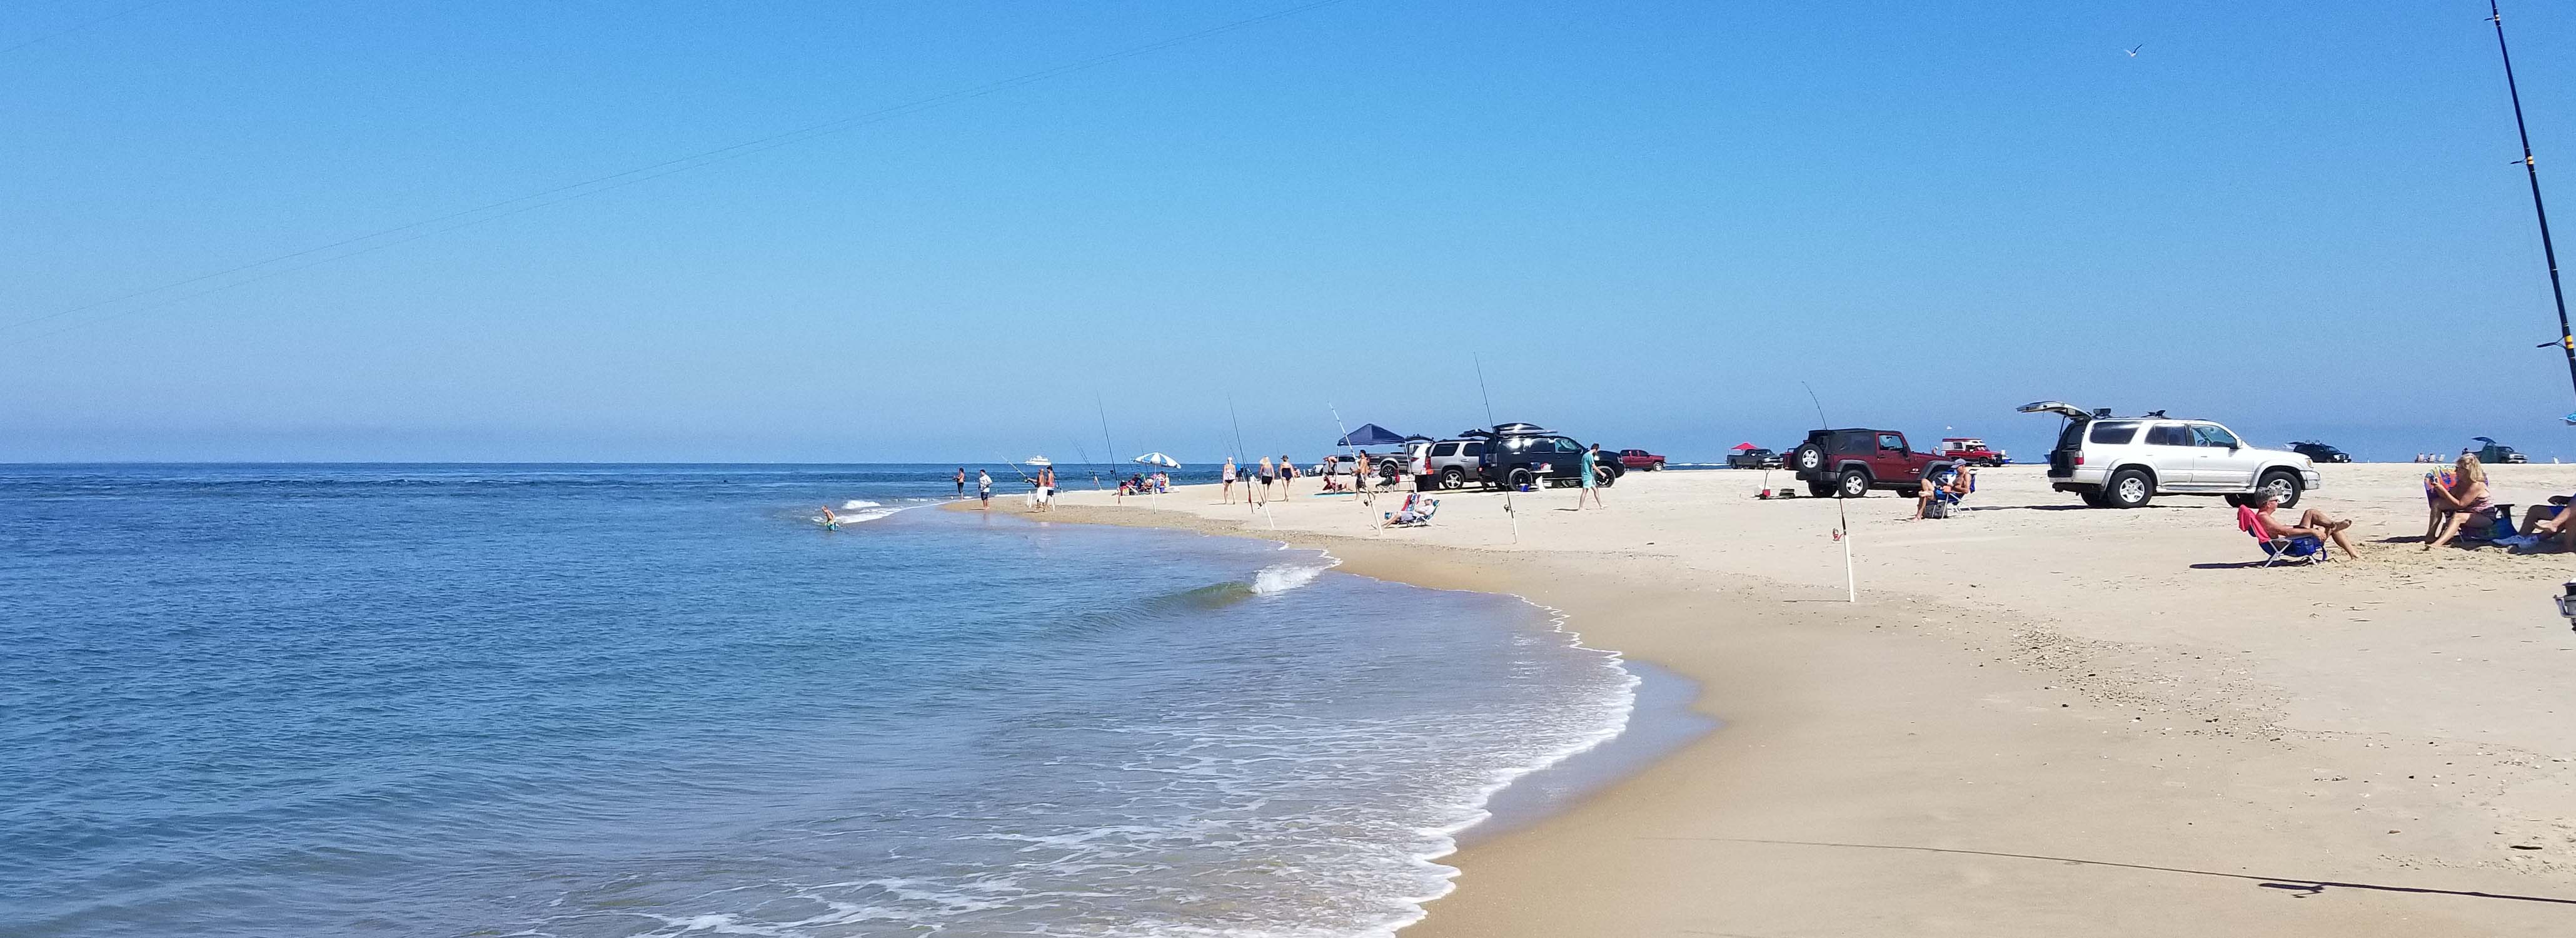 surf fishing vehicles on the beach